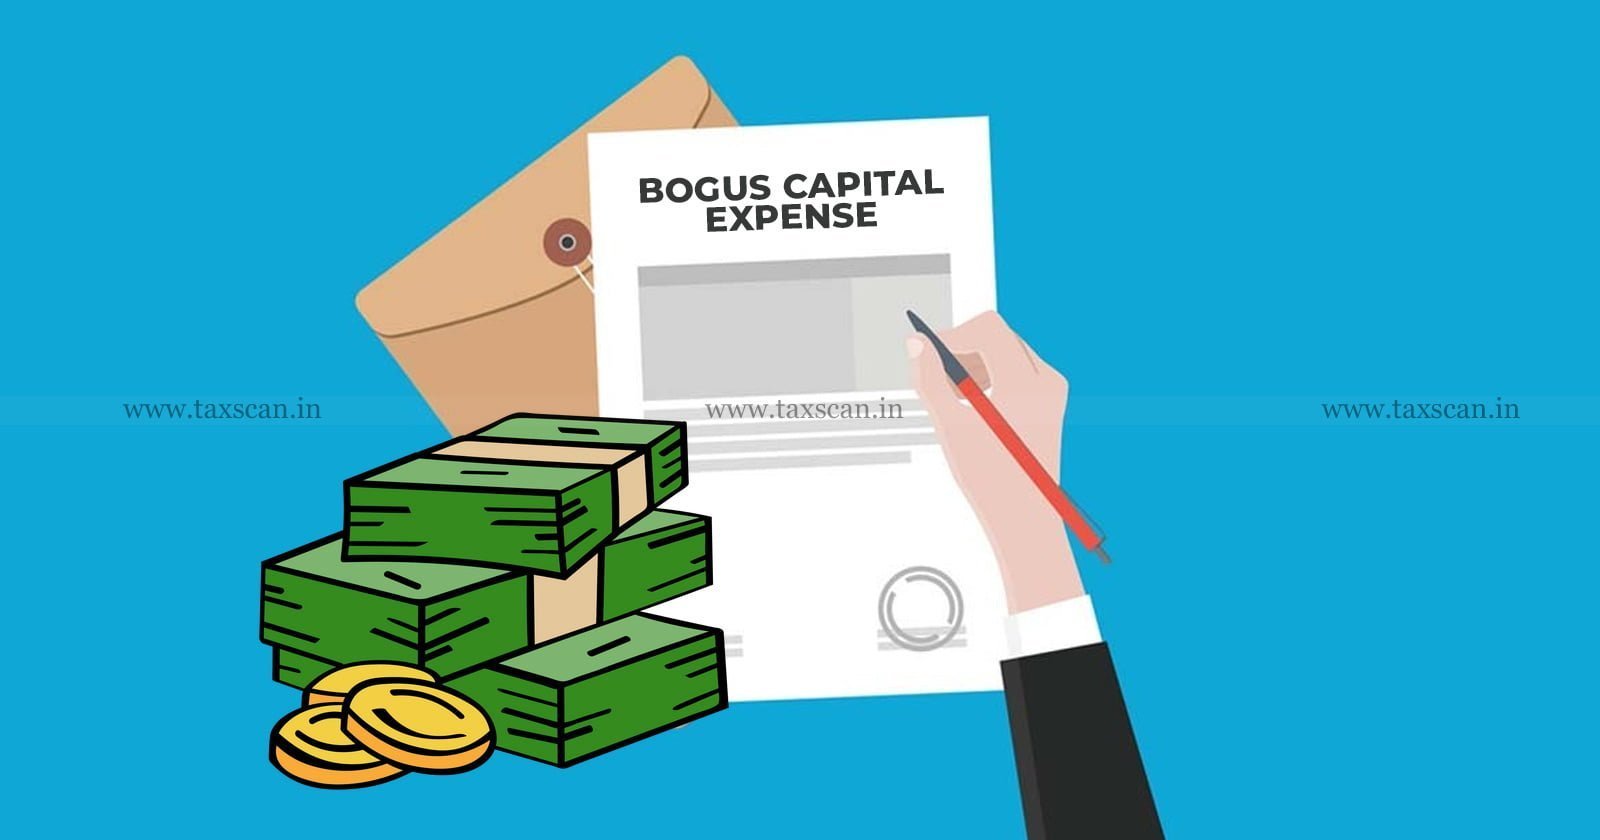 Bogus Capital Expense - Capital Expense - Bogus - Furnishing Evidence - Evidence - ITAT - Income Tax - Tax - Taxscan